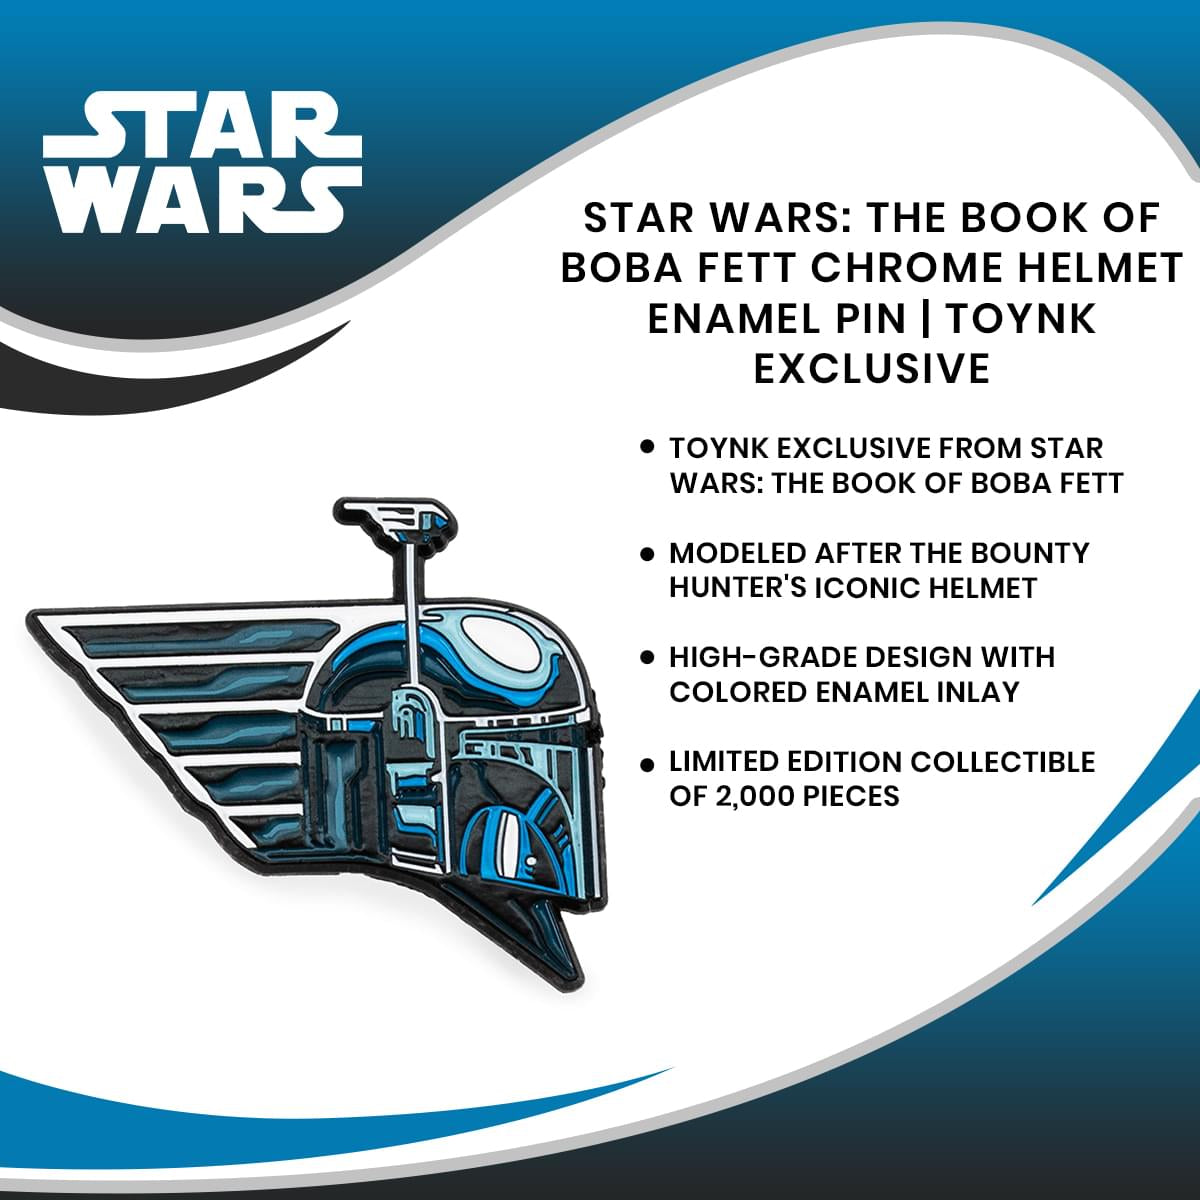 Star Wars: The Book of Boba Fett Chrome Helmet Enamel Pin | Toynk Exclusive